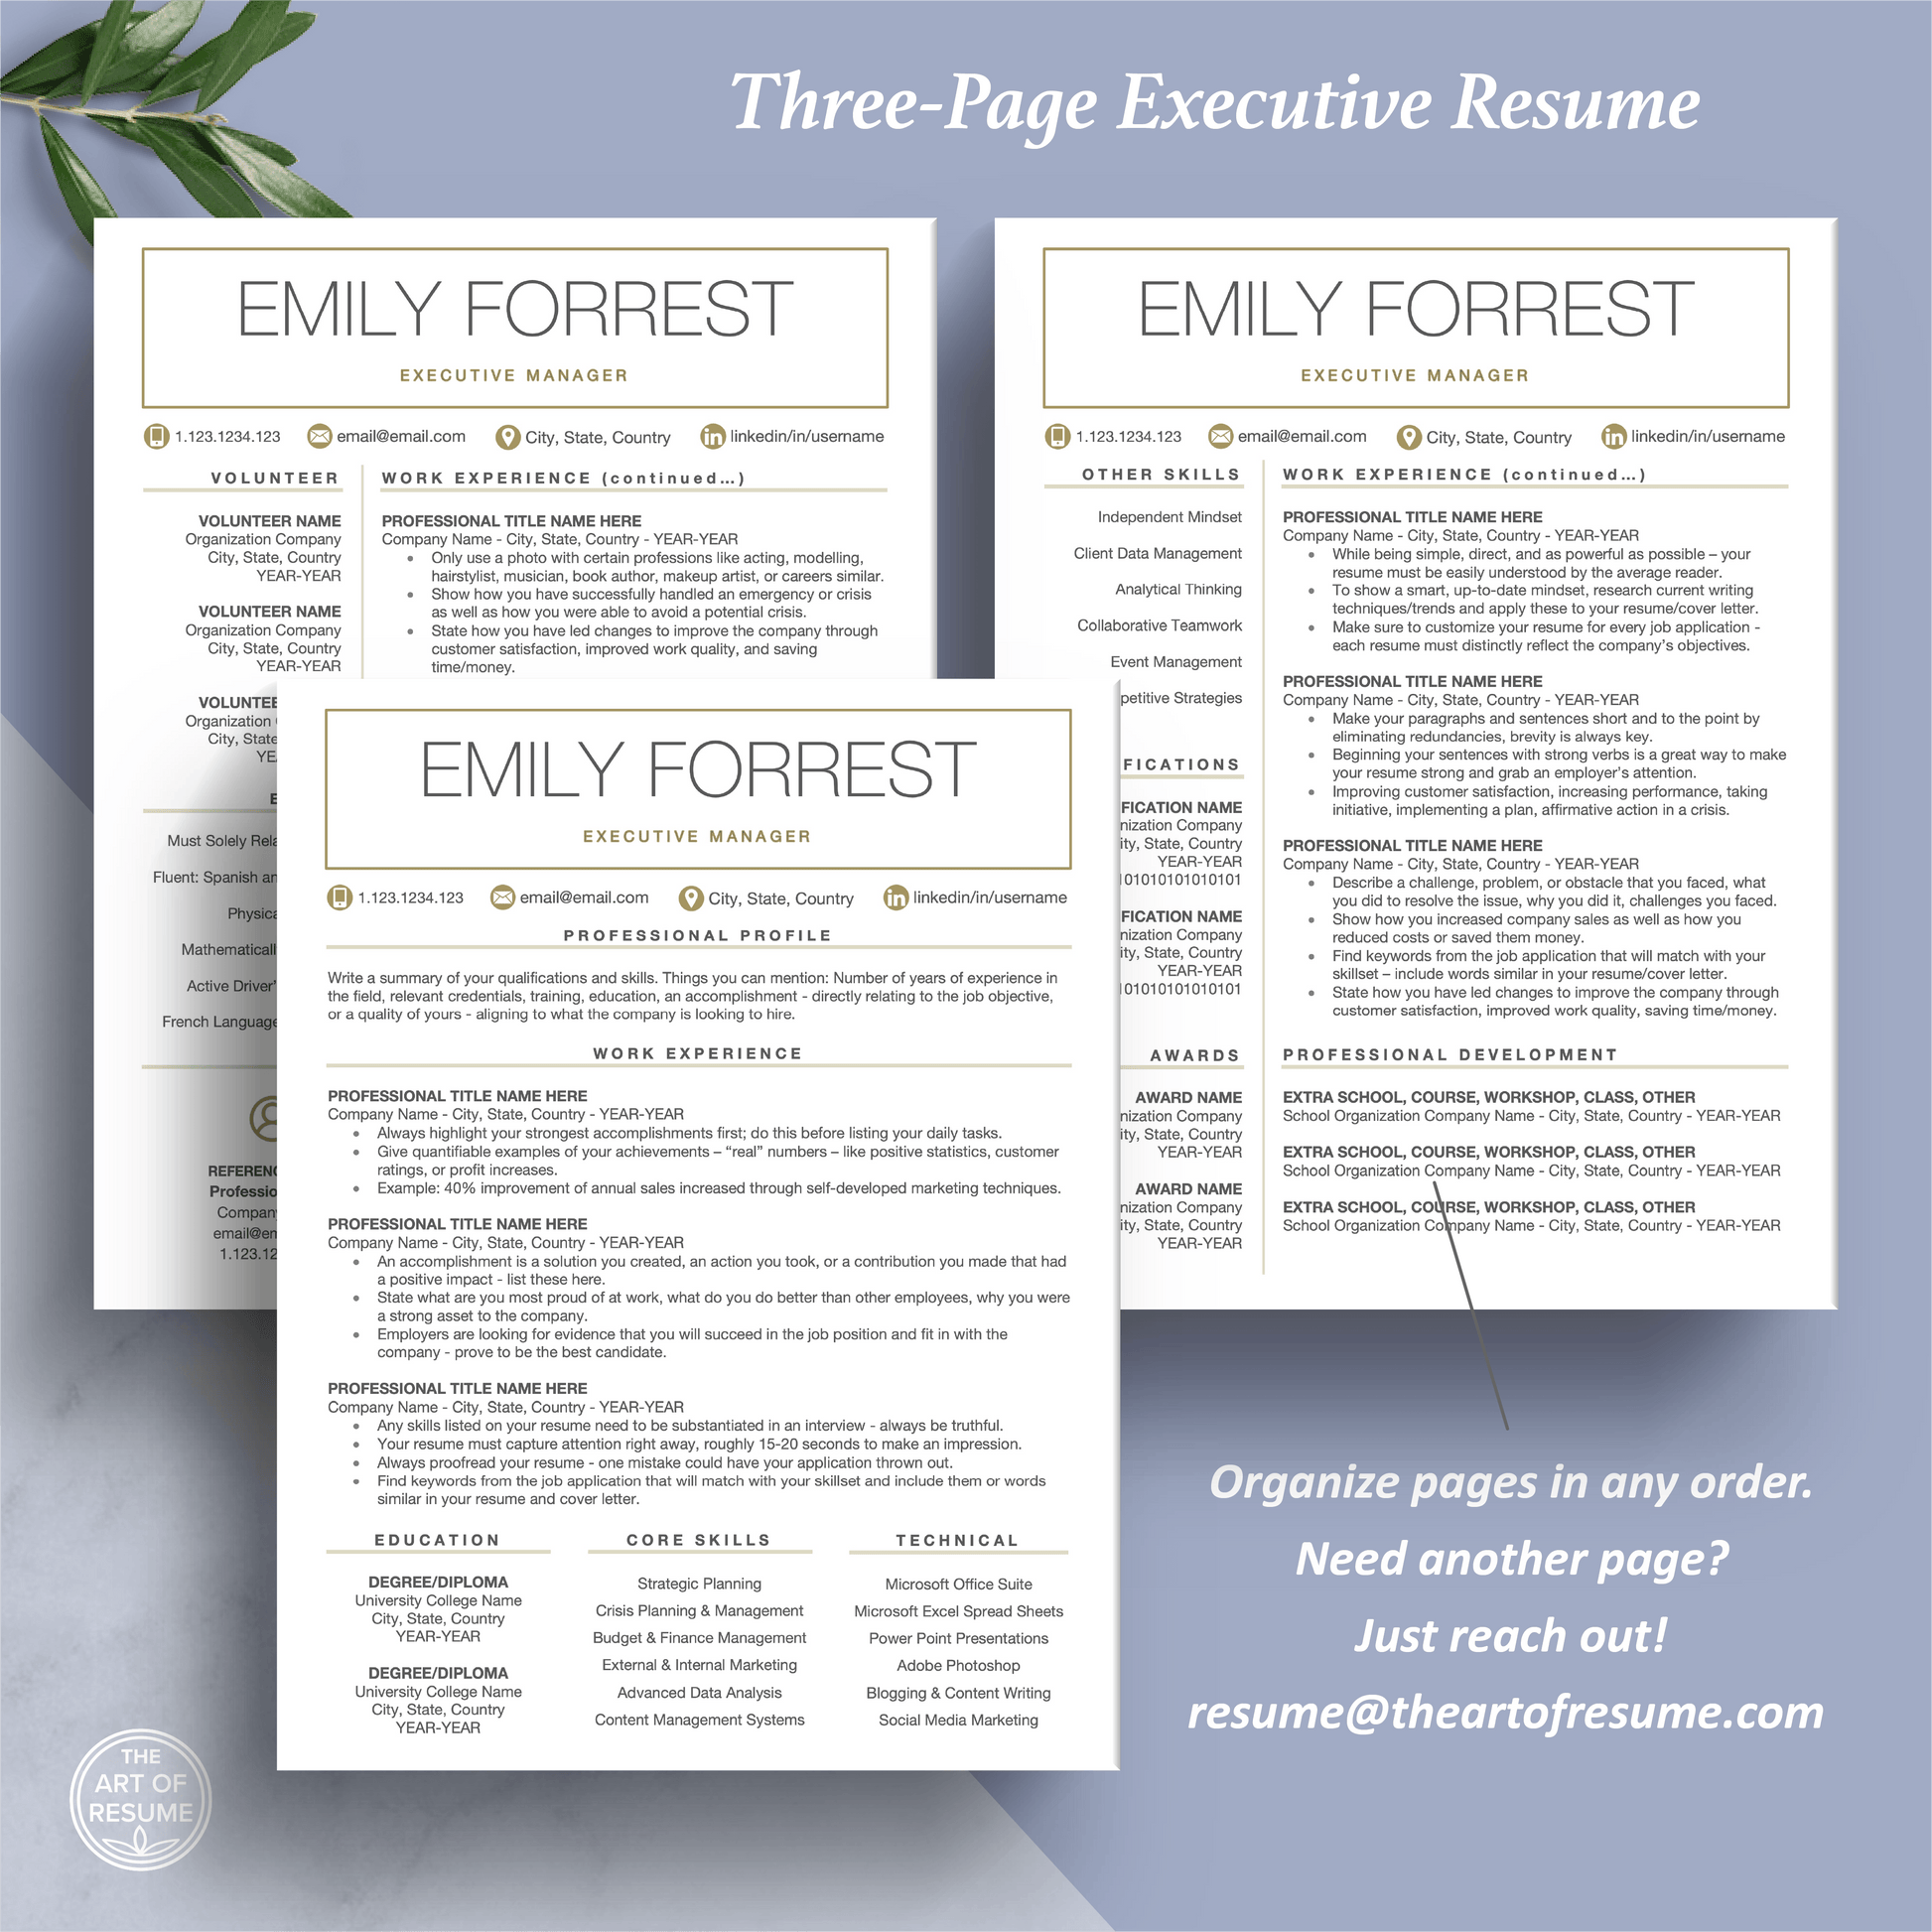 Modern Resume Templates | Professional Resume Design Download - The Art of Resume